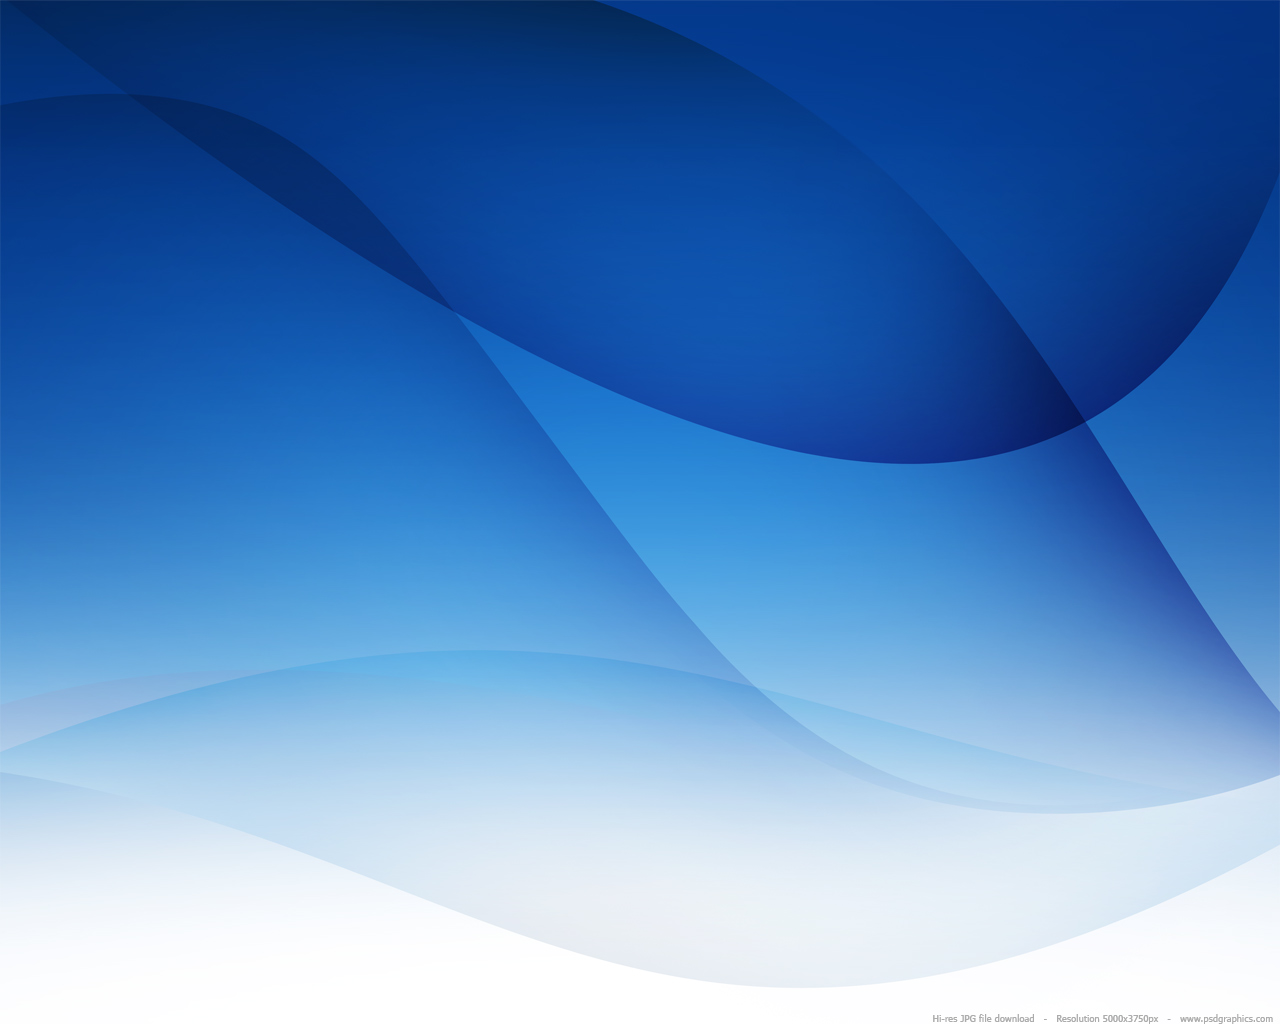 Blue White Background Images - Free Download on Freepik